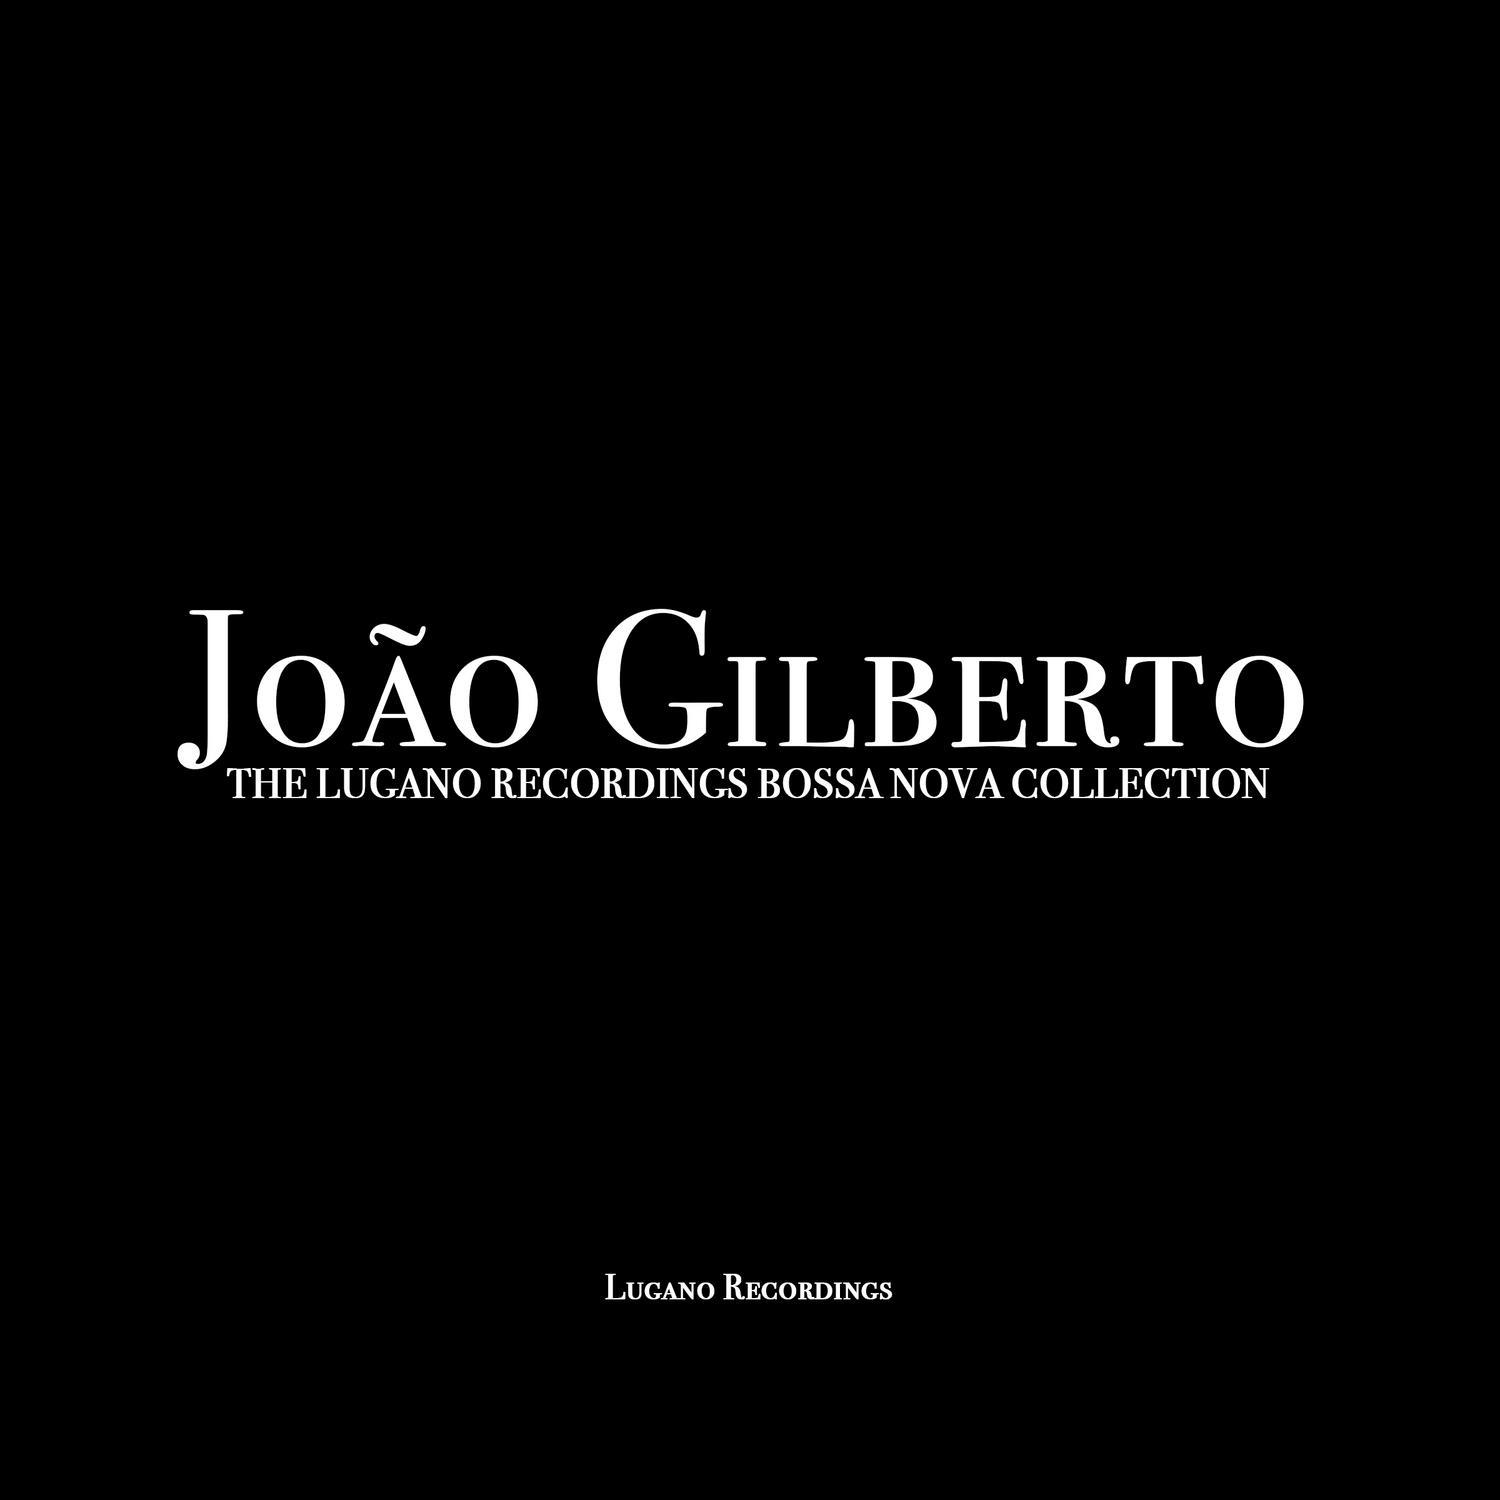 Jo o Gilberto  The Lugano Recordings Bossa Nova Collection